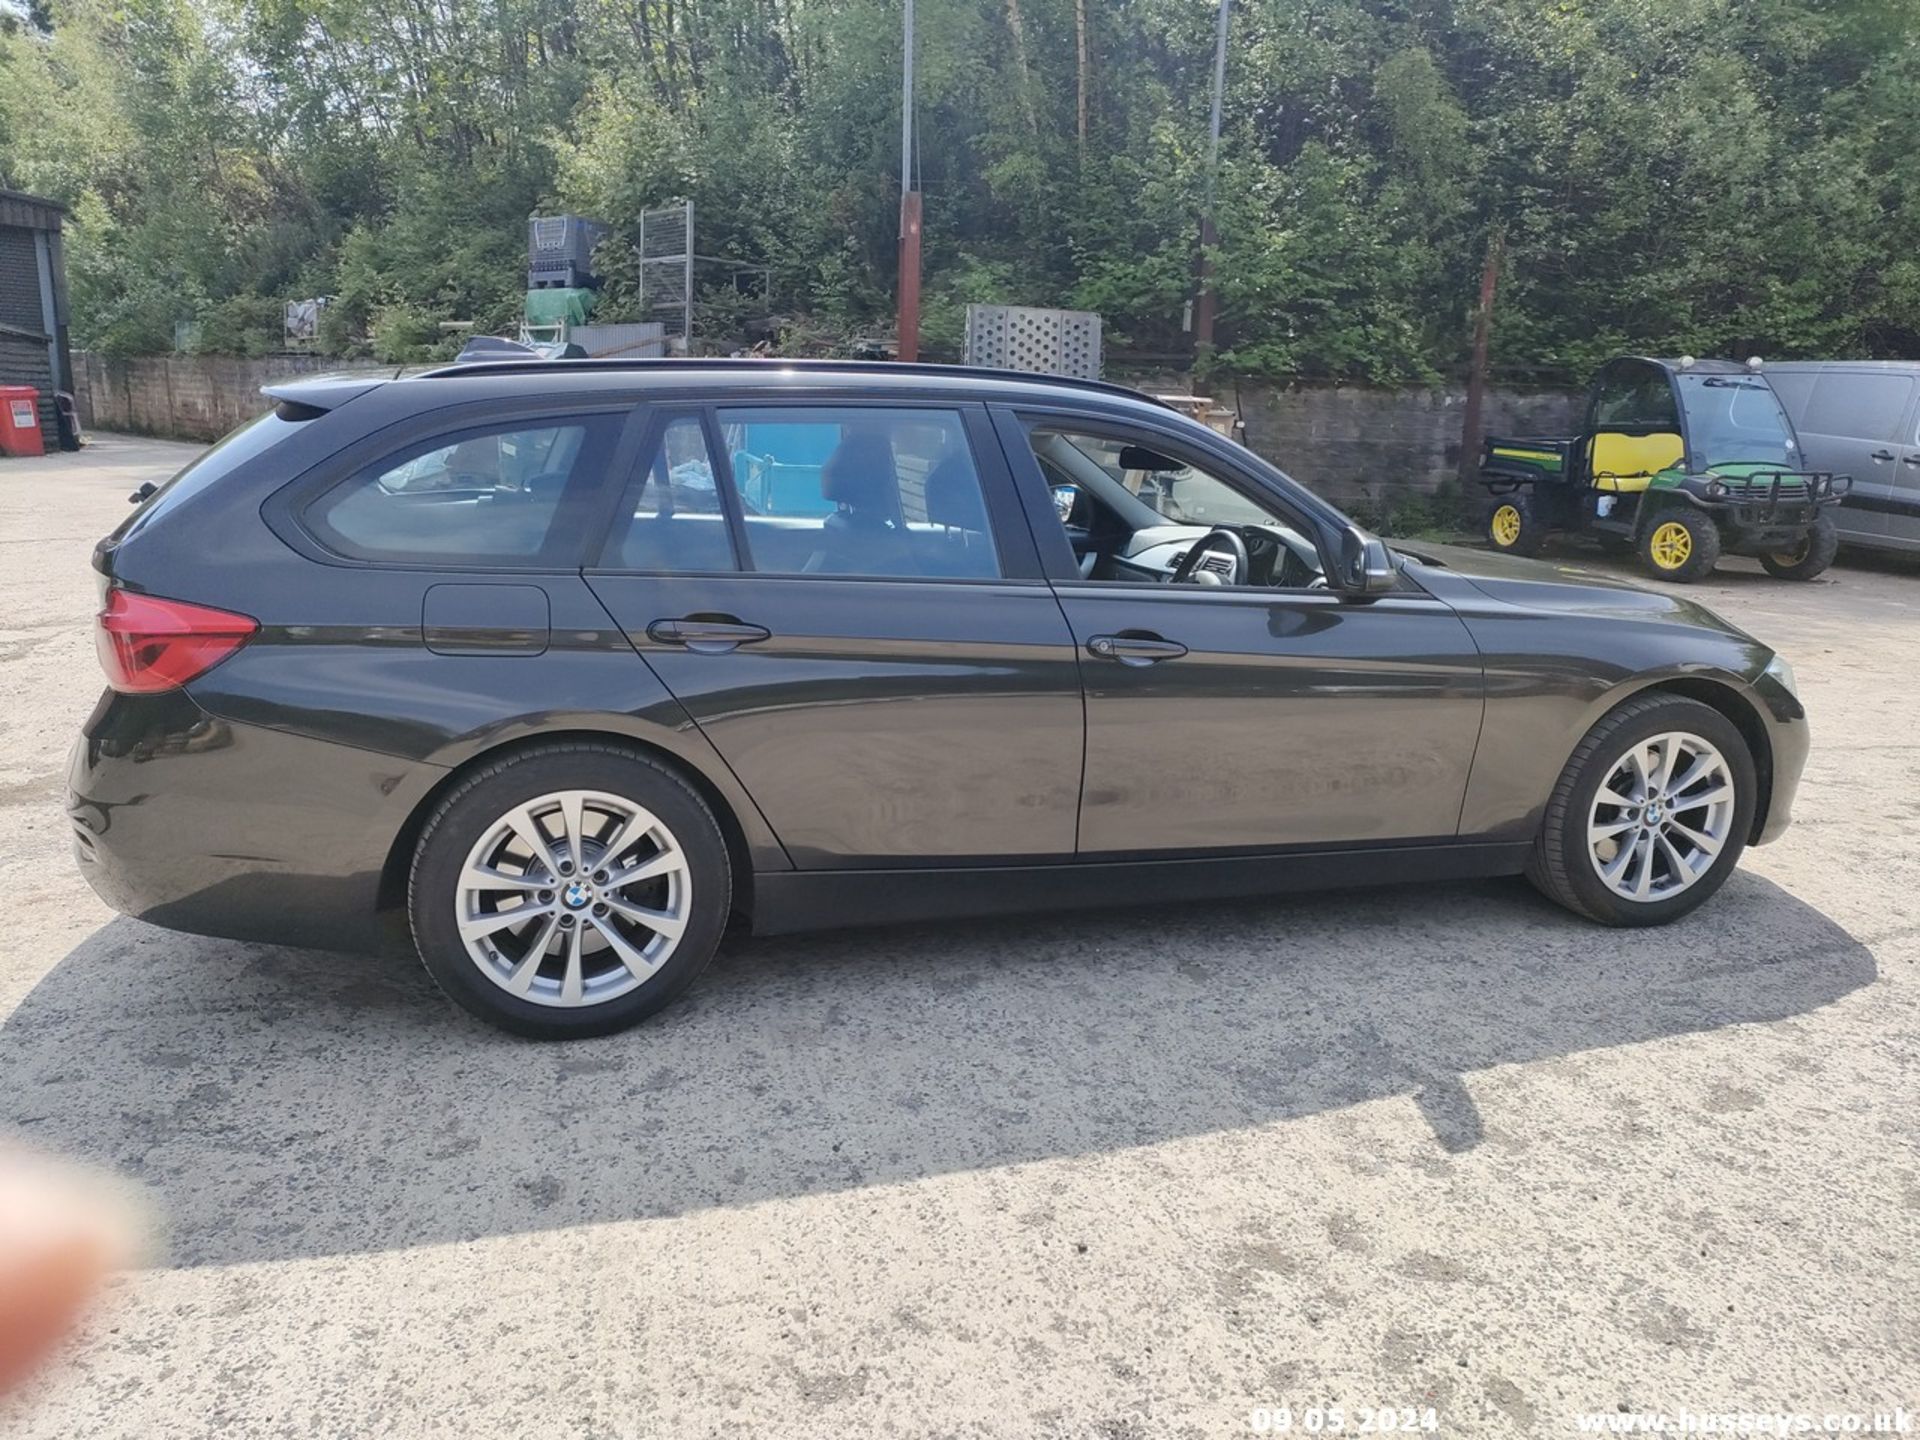 18/18 BMW 330D XDRIVE AC AUTO - 2993cc 5dr Estate (Brown) - Image 46 of 67